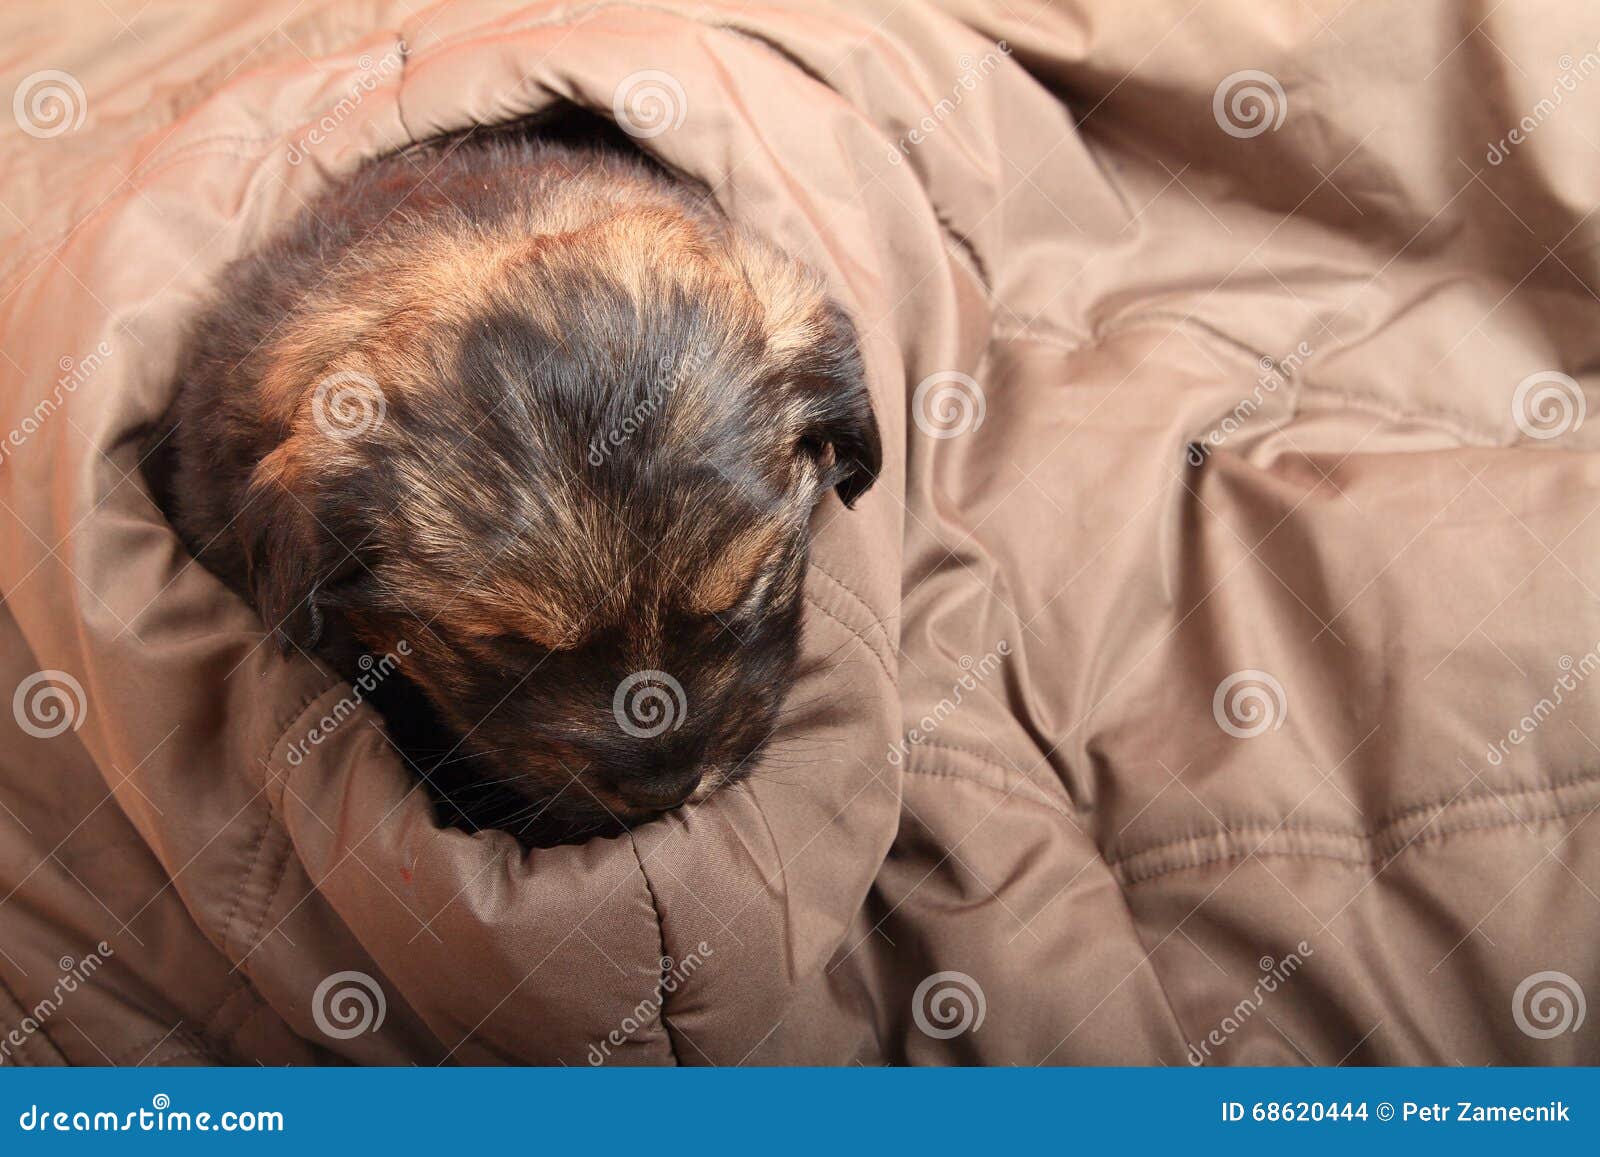 puppy sleeping bag